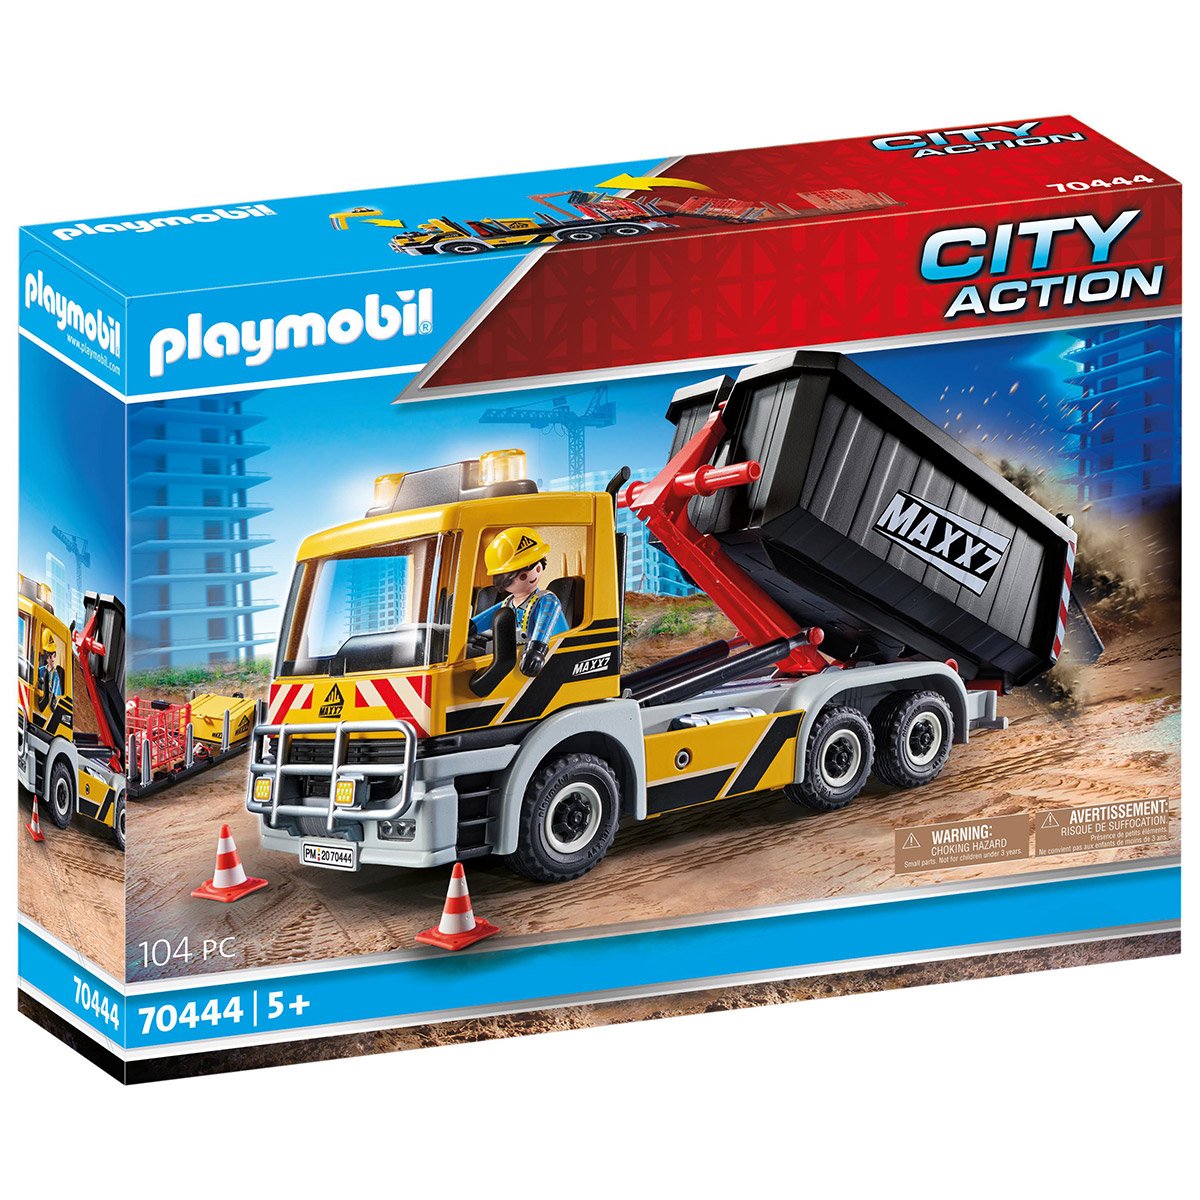 camion de chantier playmobil